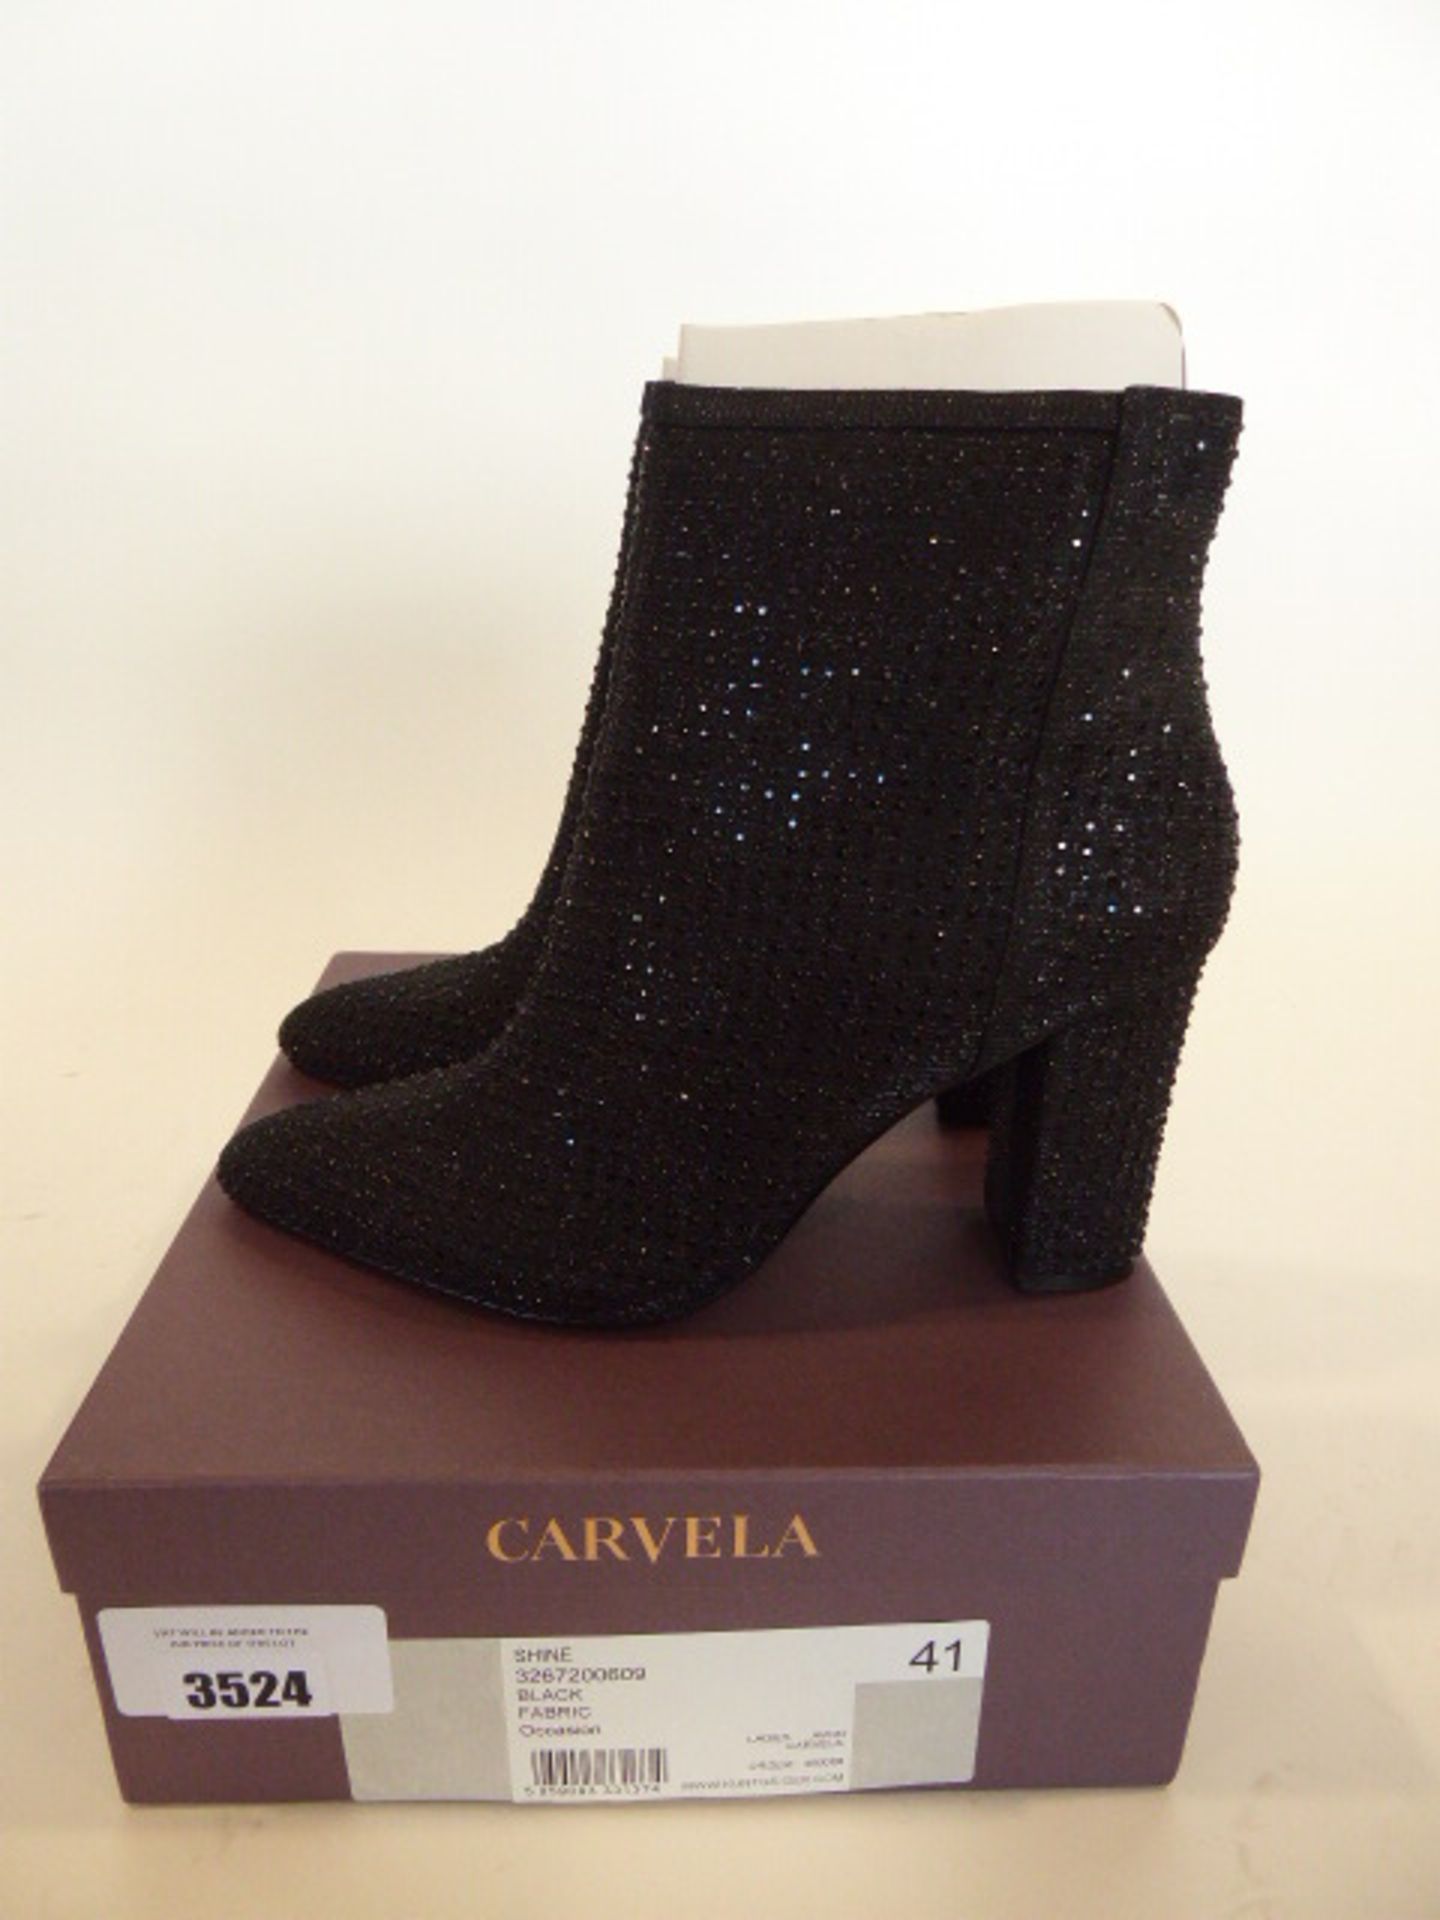 Carvela Shine boots size EU 41